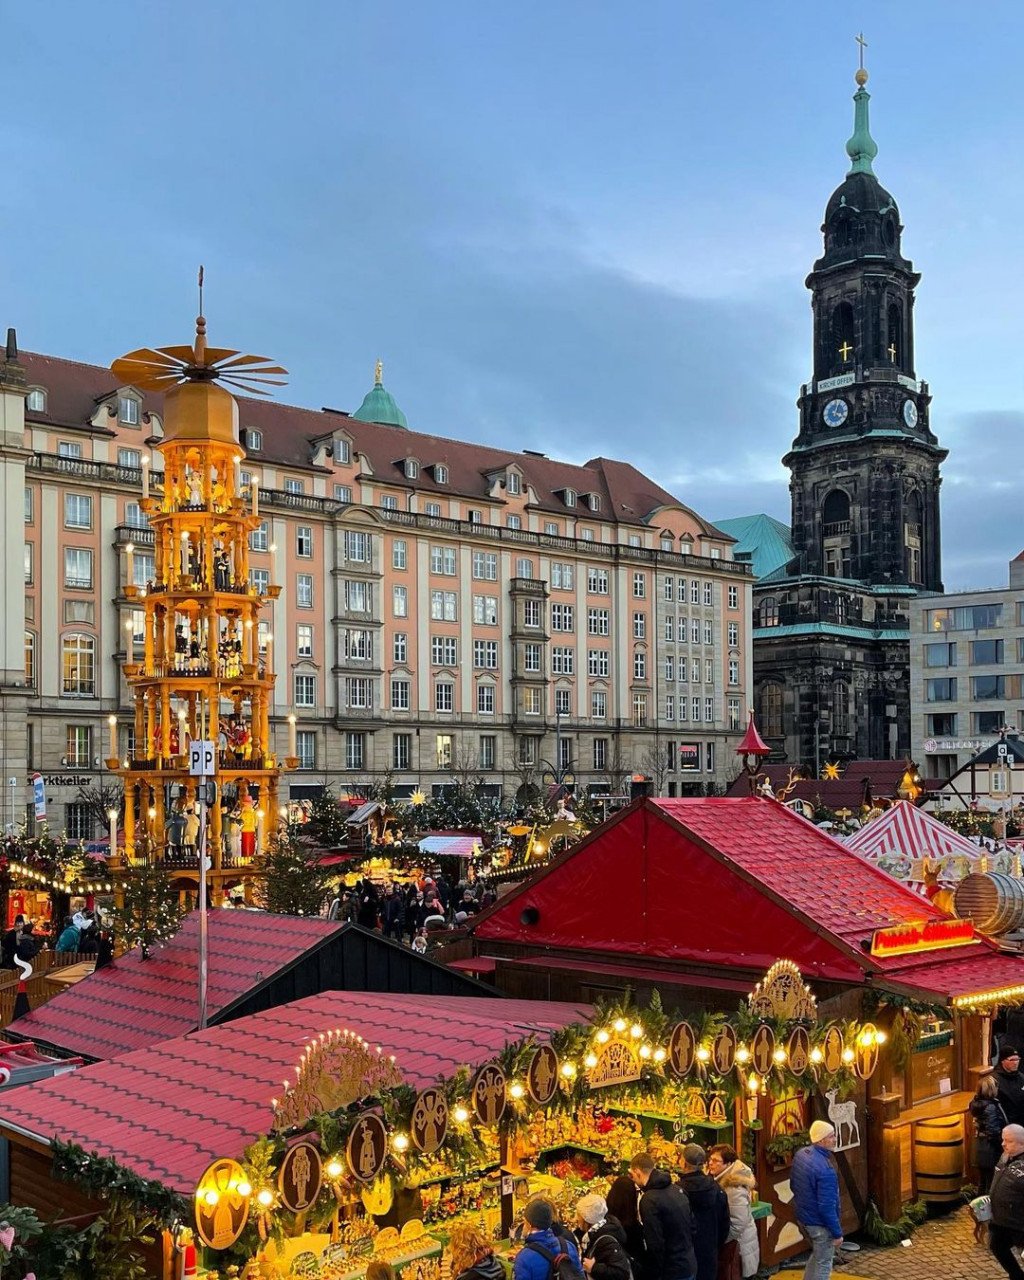 Kini, Striezelmarkt Dresden menjadi tempat yang sangat istimewa bagi warga Dresden